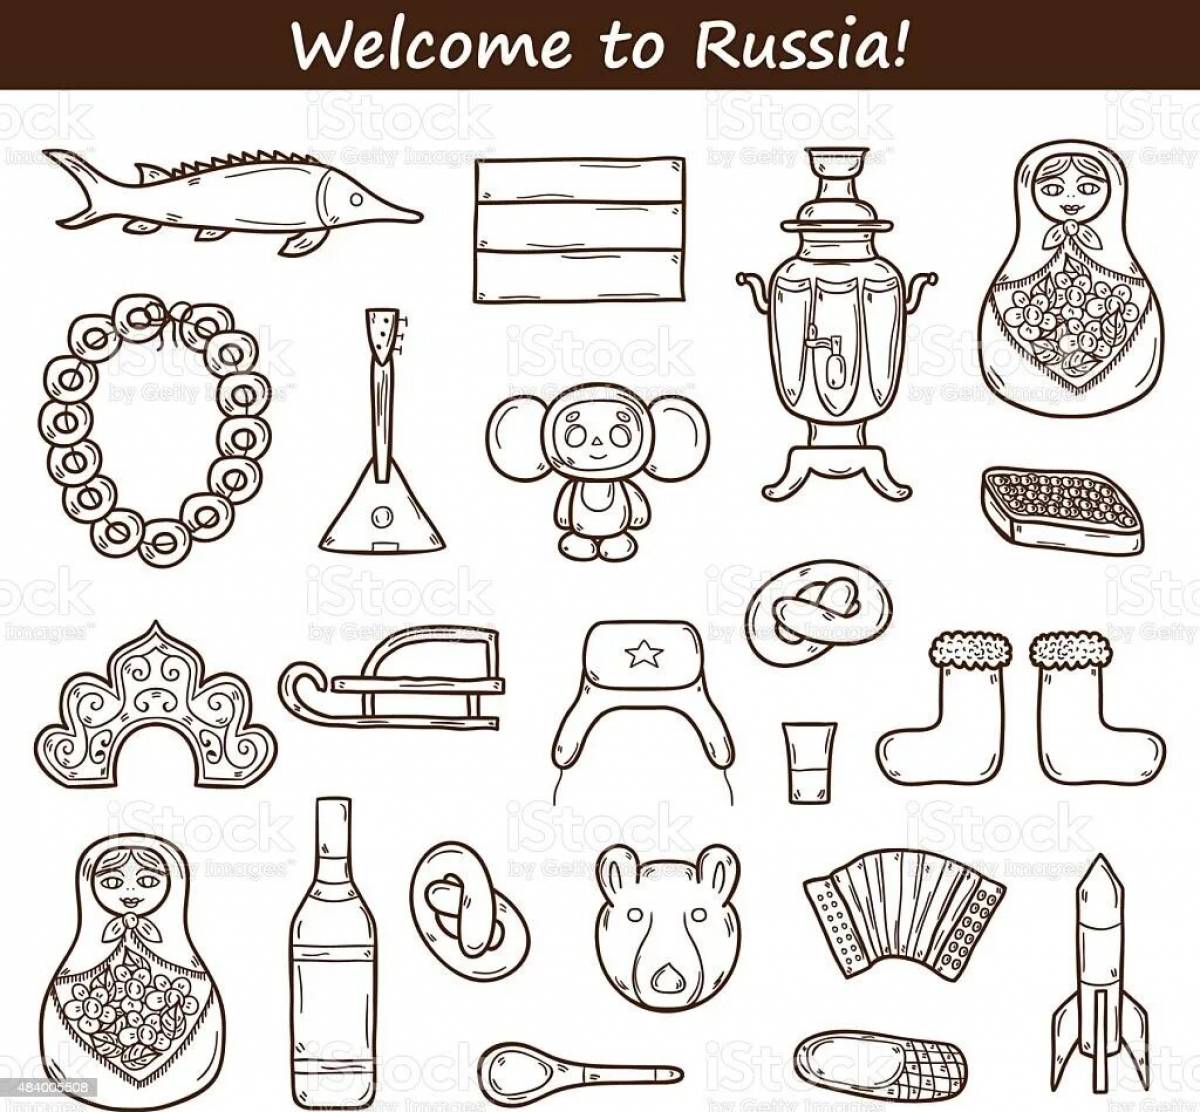 Russian symbols for preschool children #21